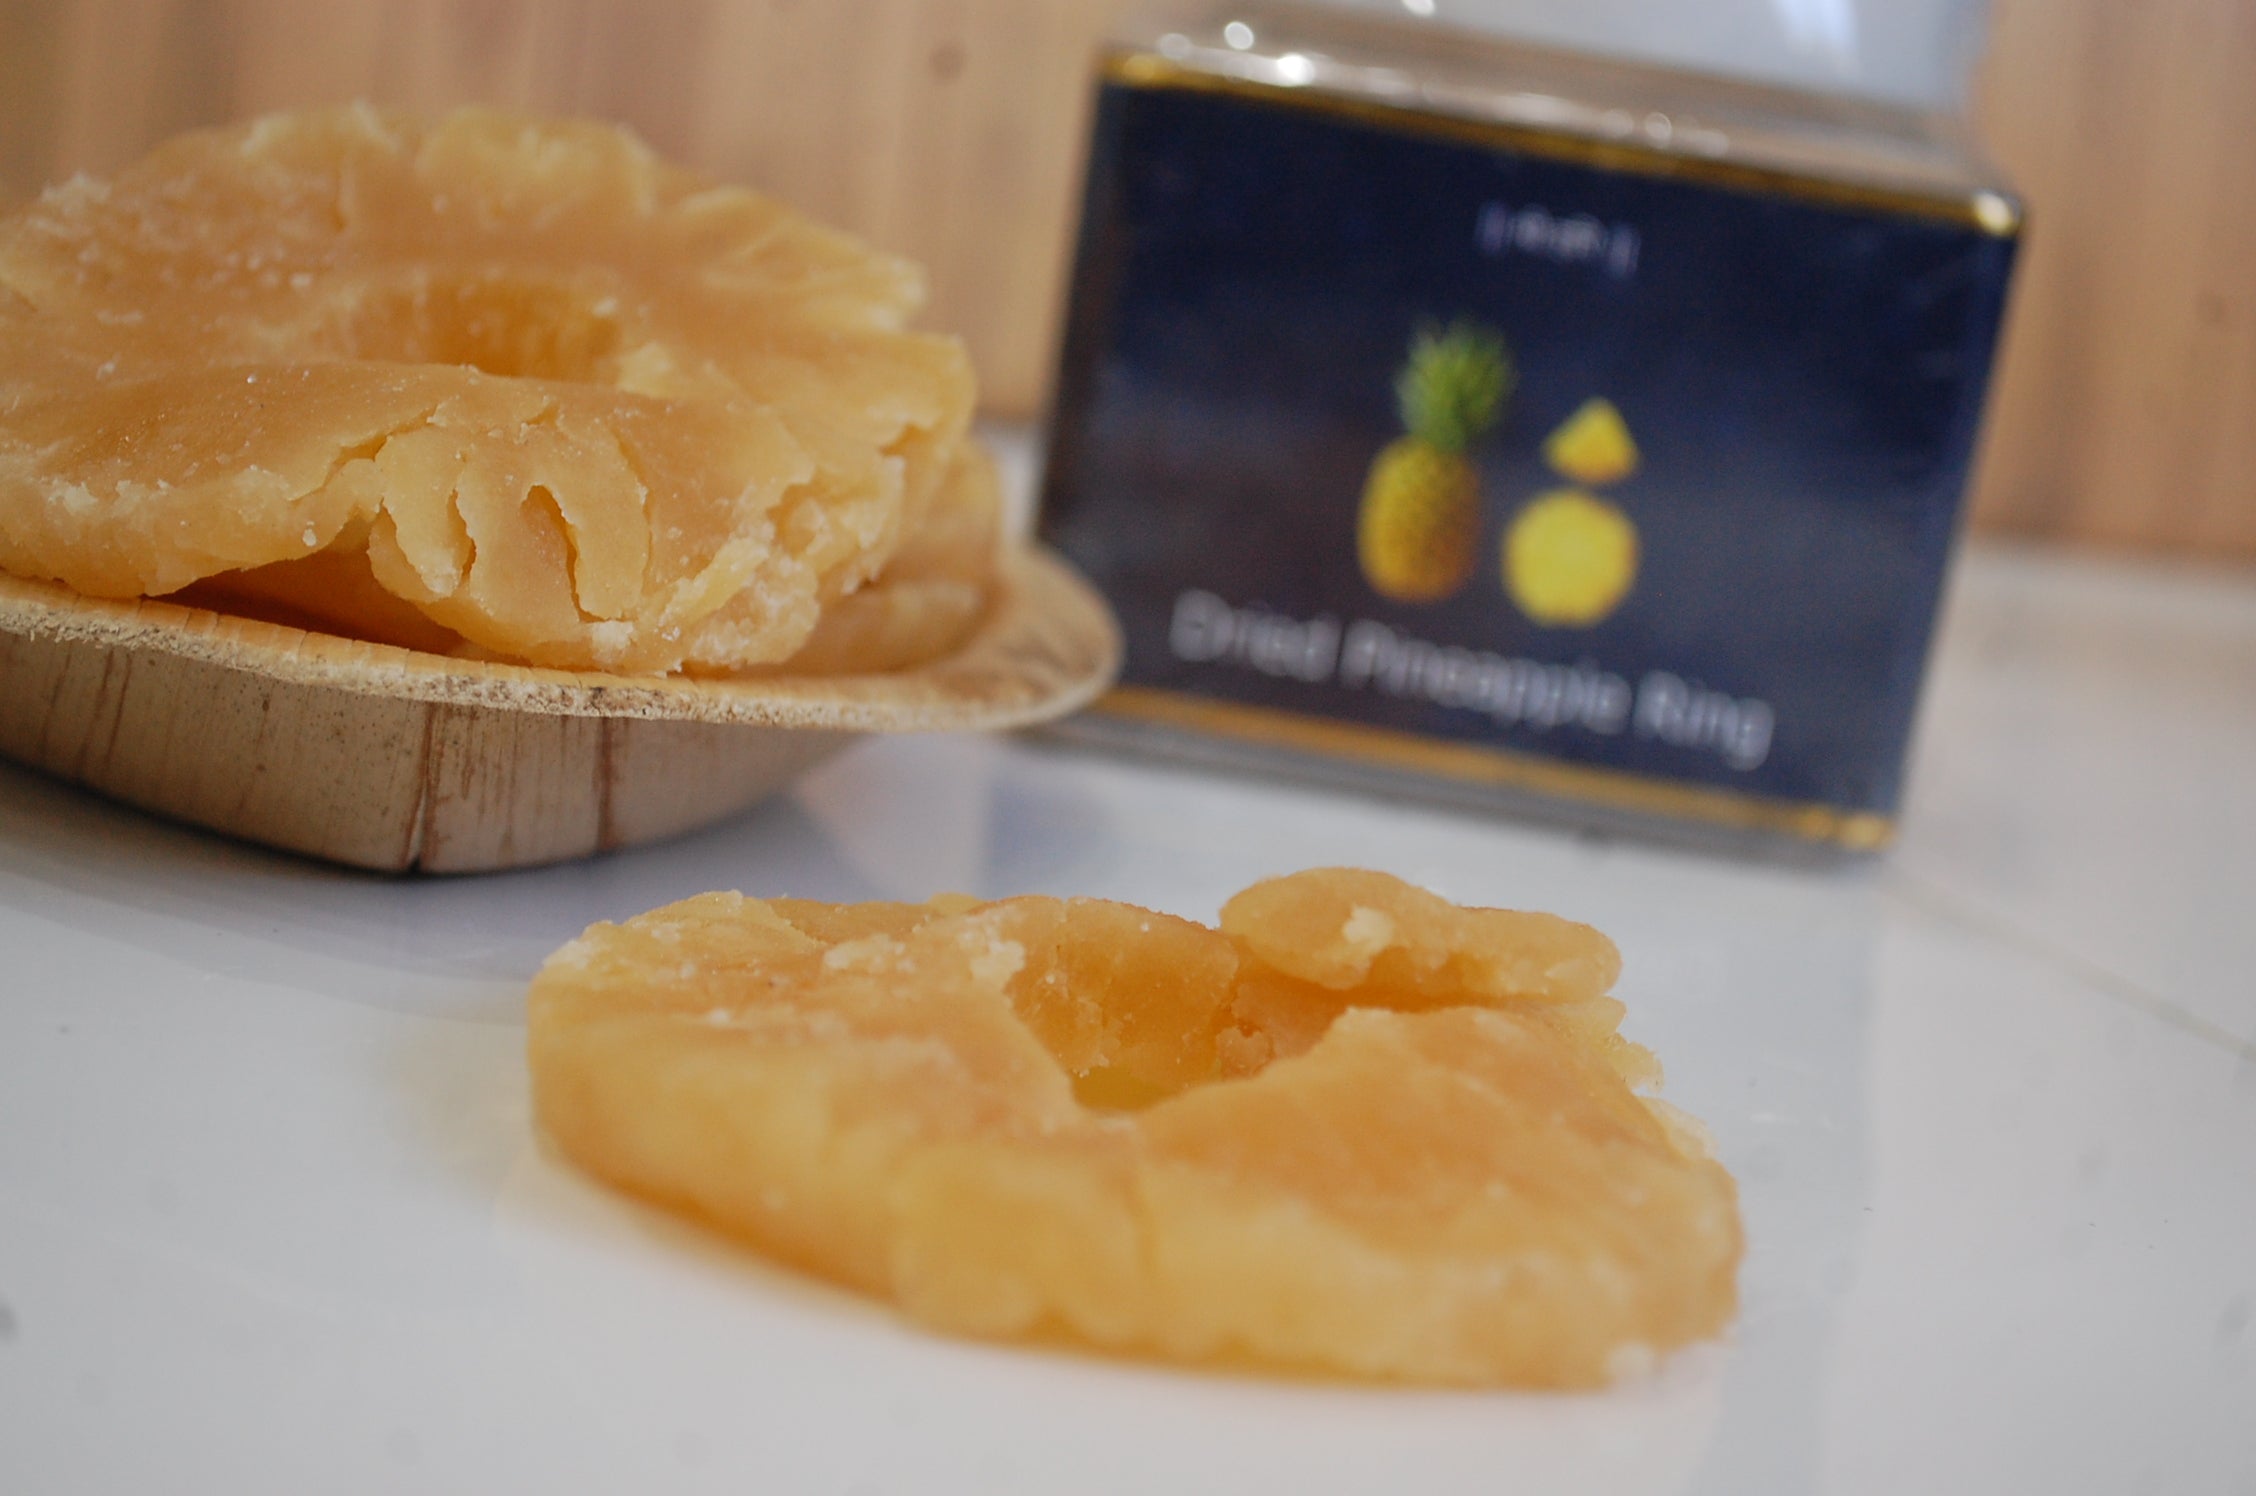 Dried Pineapple Ring Premium Quality 250gm